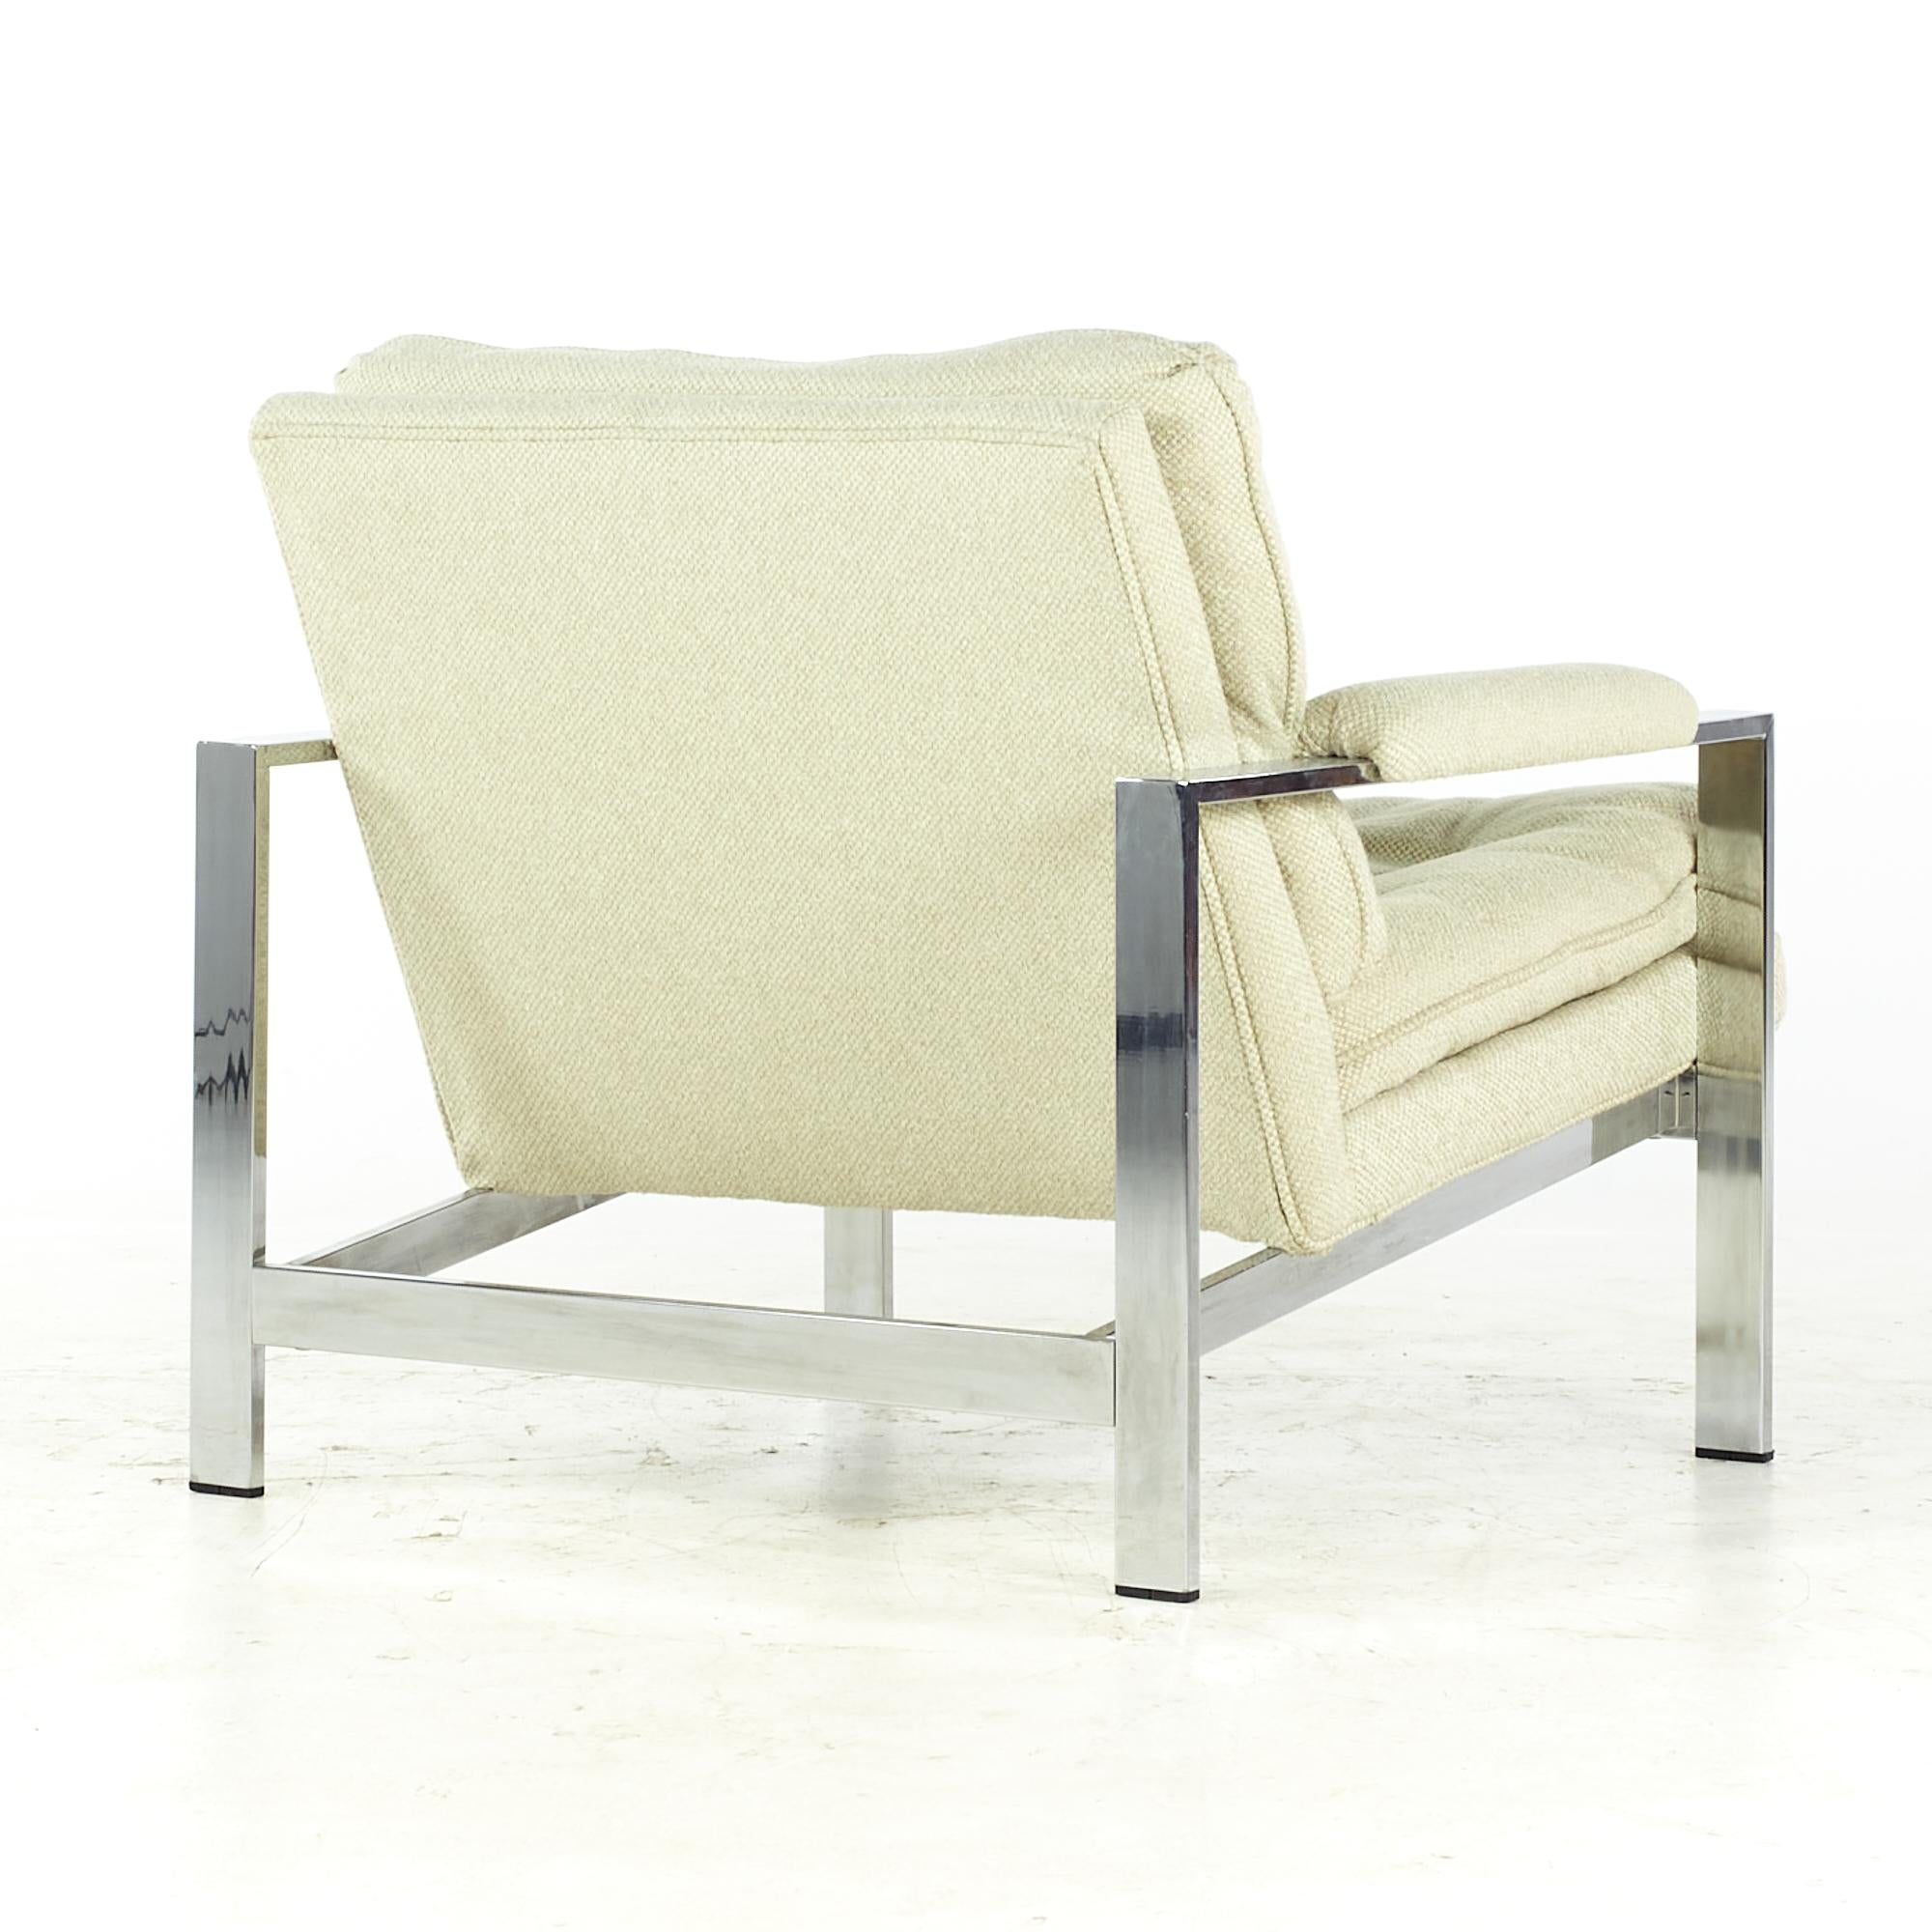 Upholstery Milo Baughman Style Midcentury Italian Flatbar Lounge Chairs, Pair For Sale